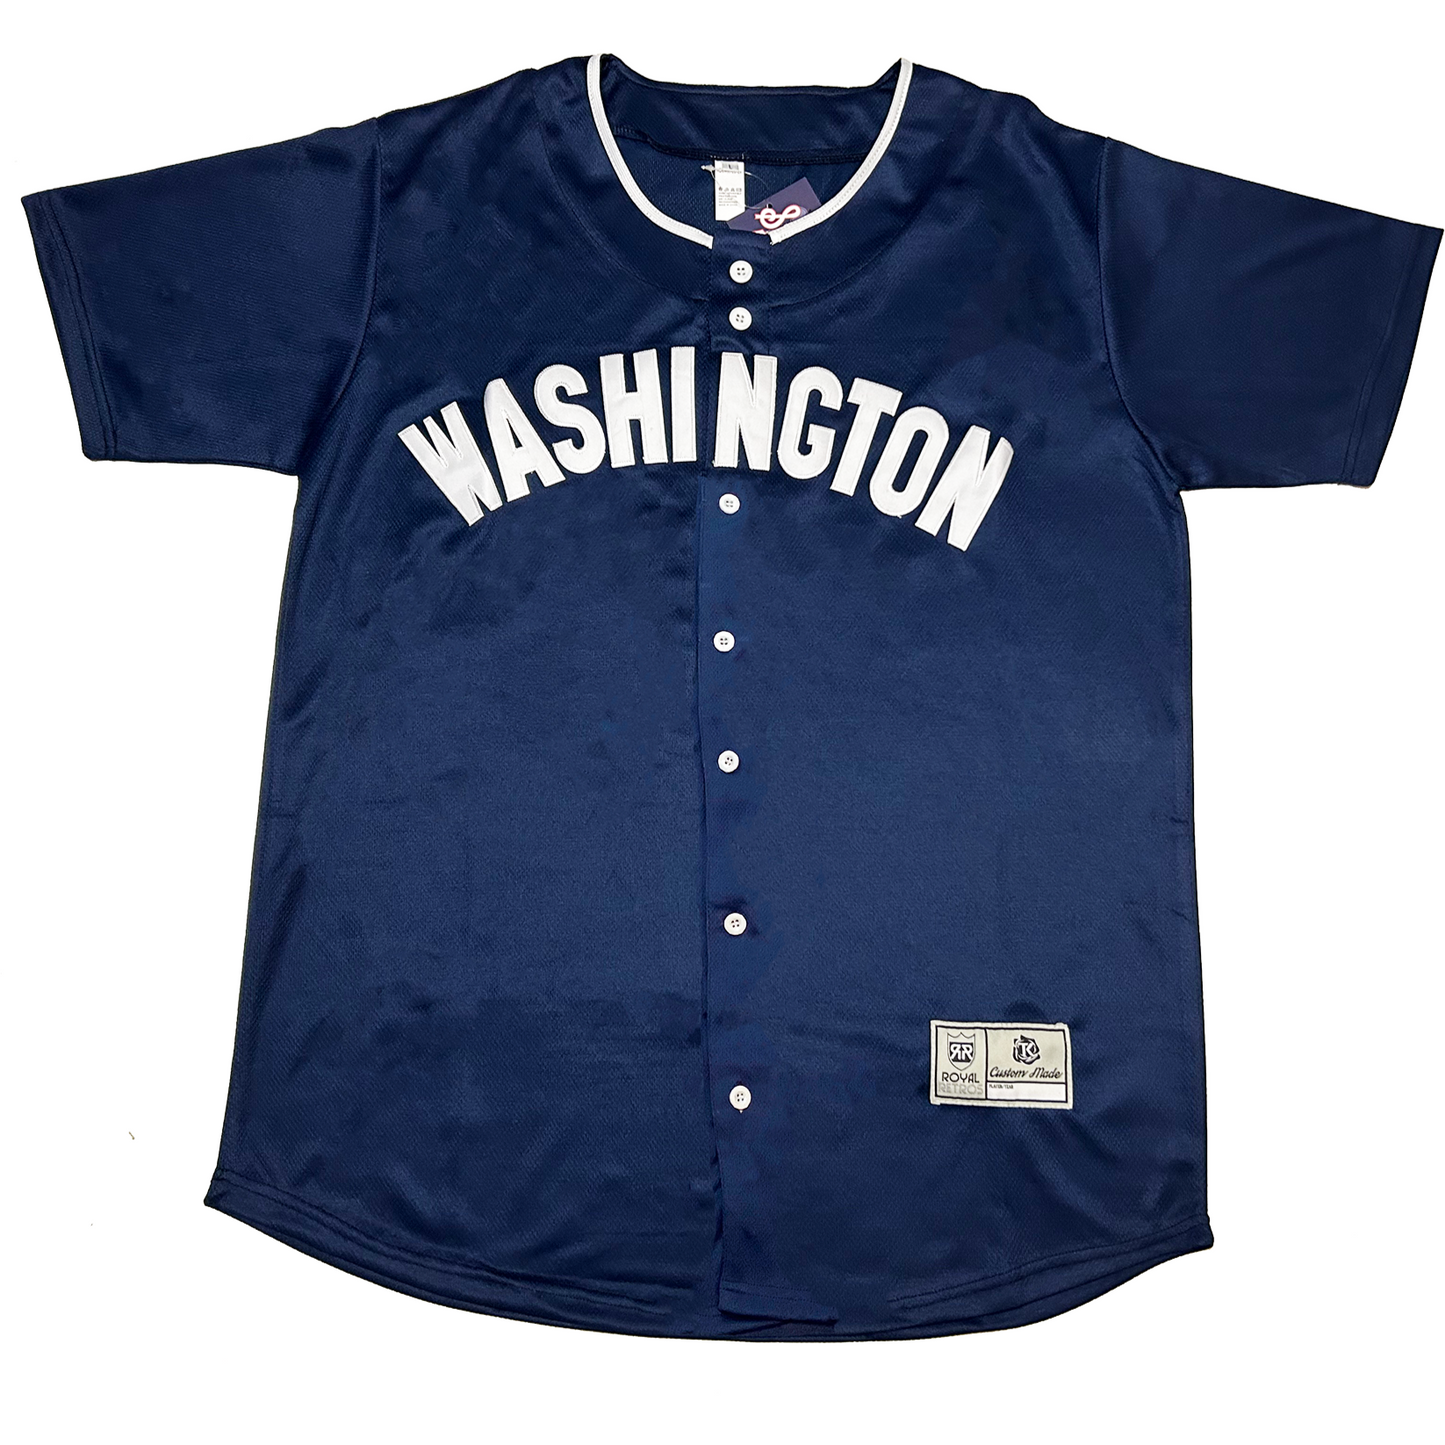 Washington Nationals Personalized Baby Jersey